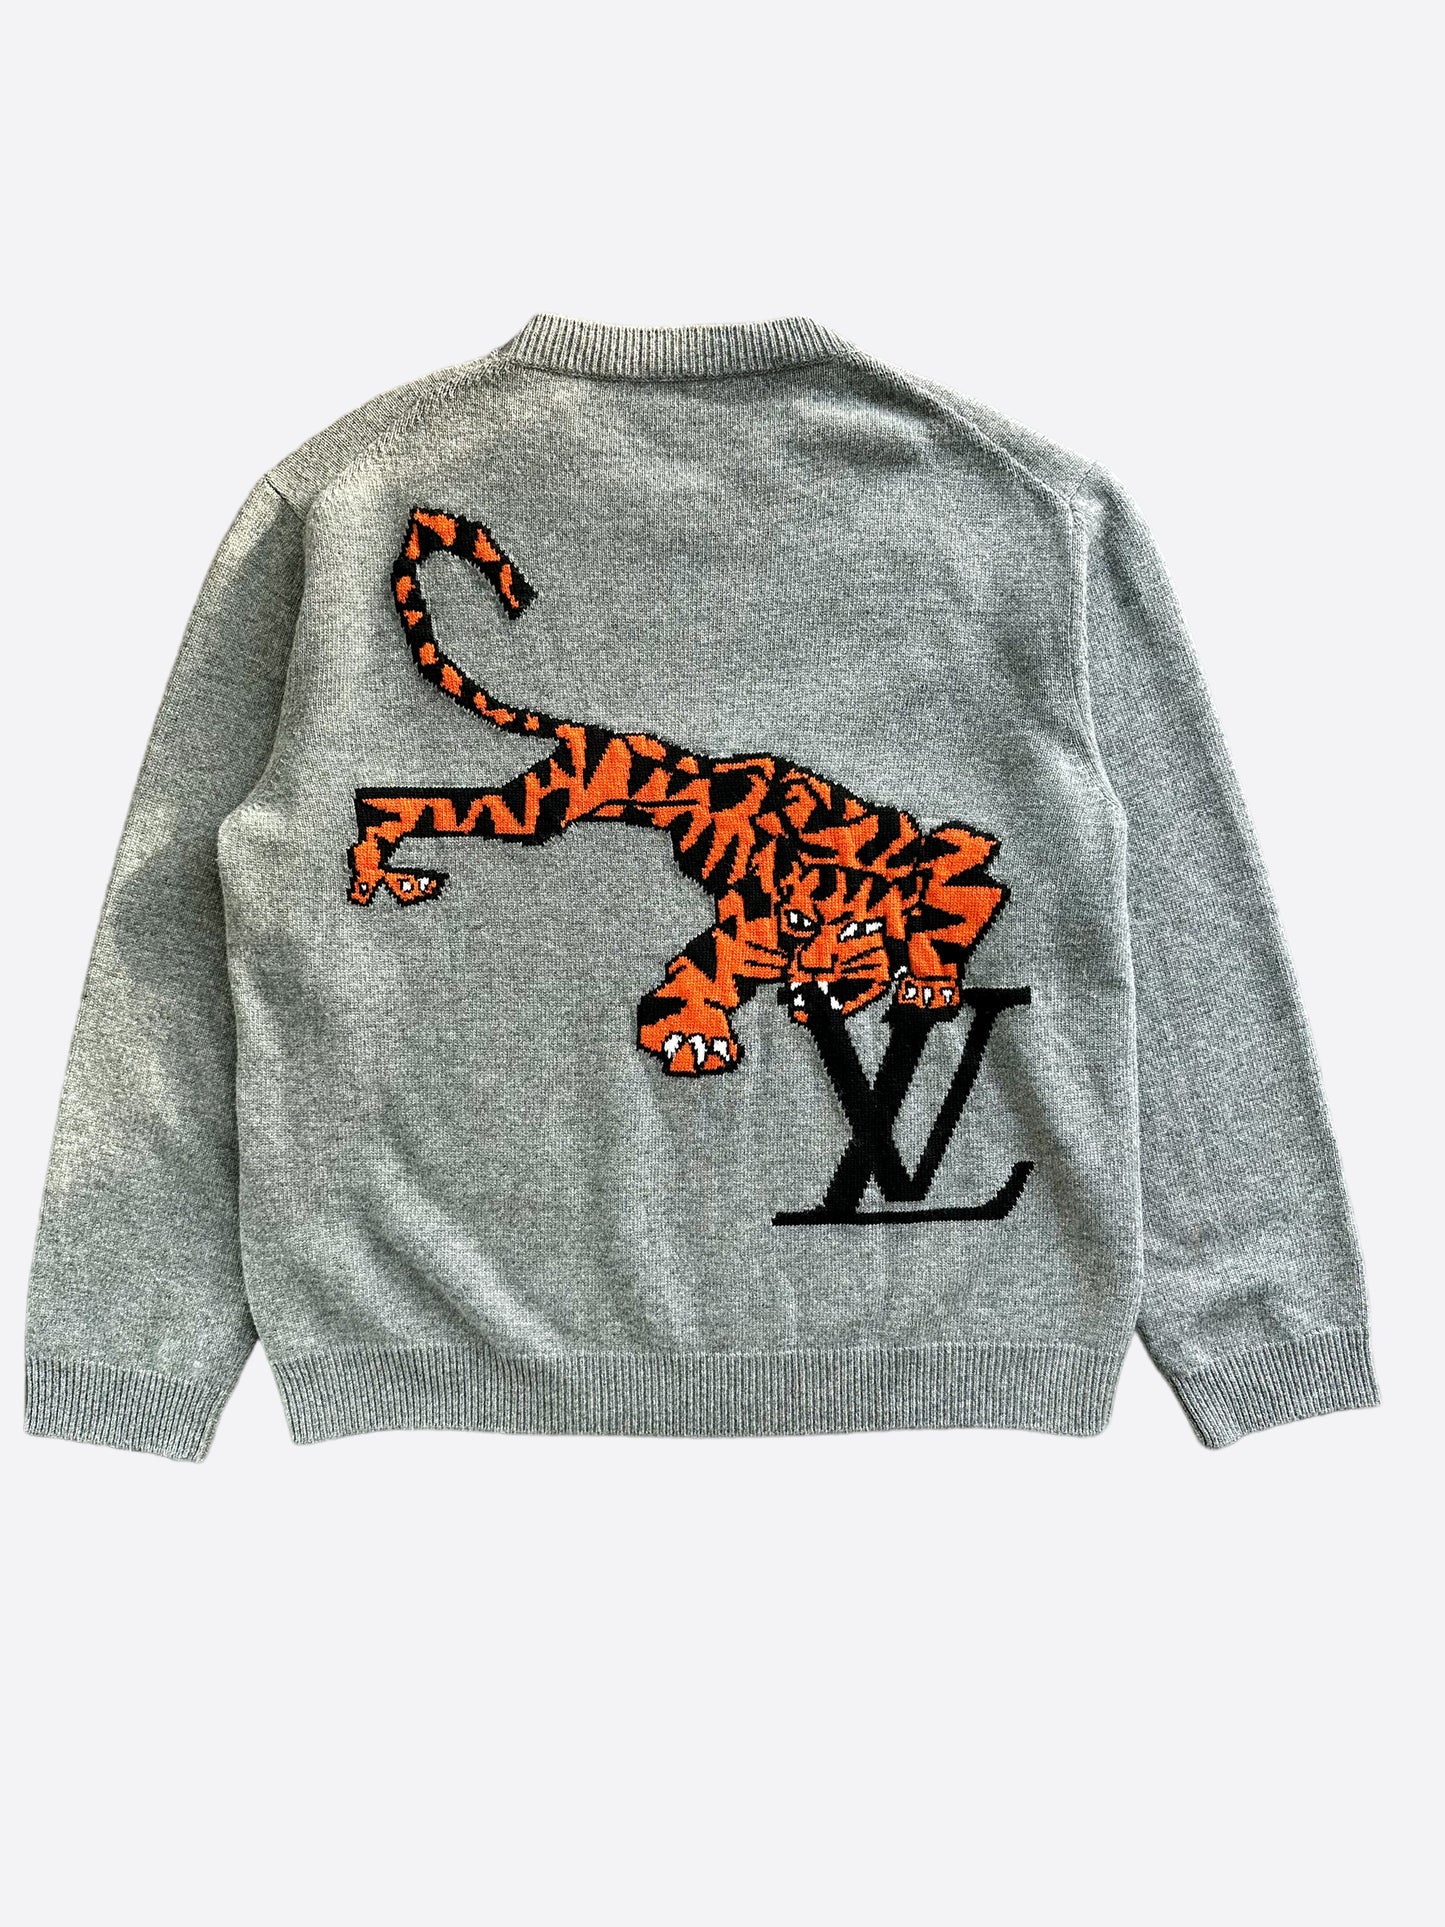 louis vuitton tiger sweater